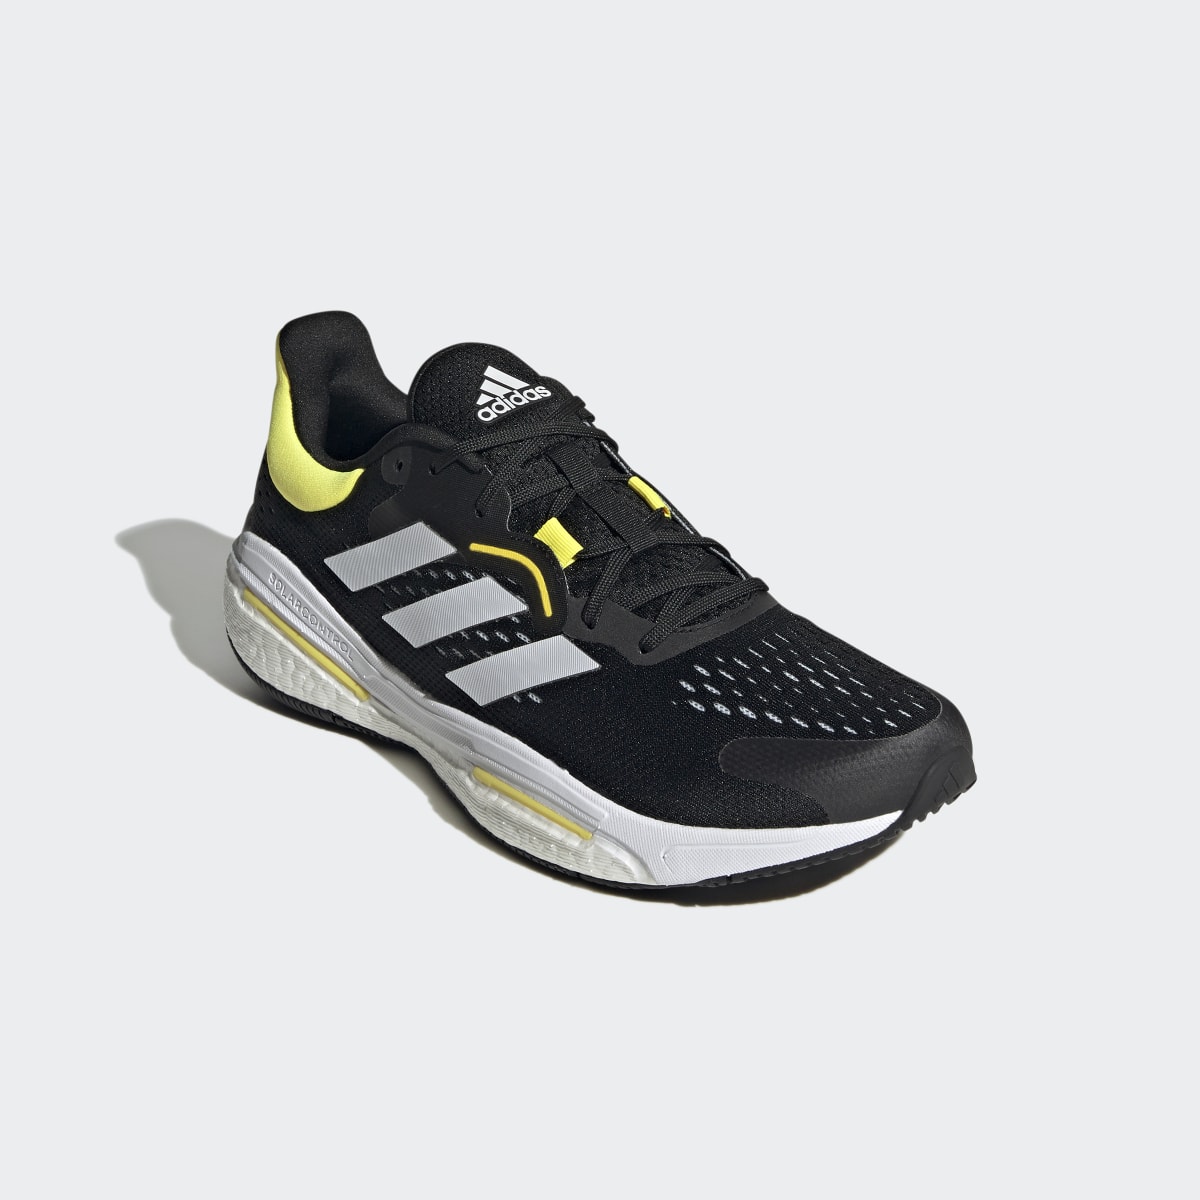 Adidas Solarcontrol Shoes. 5